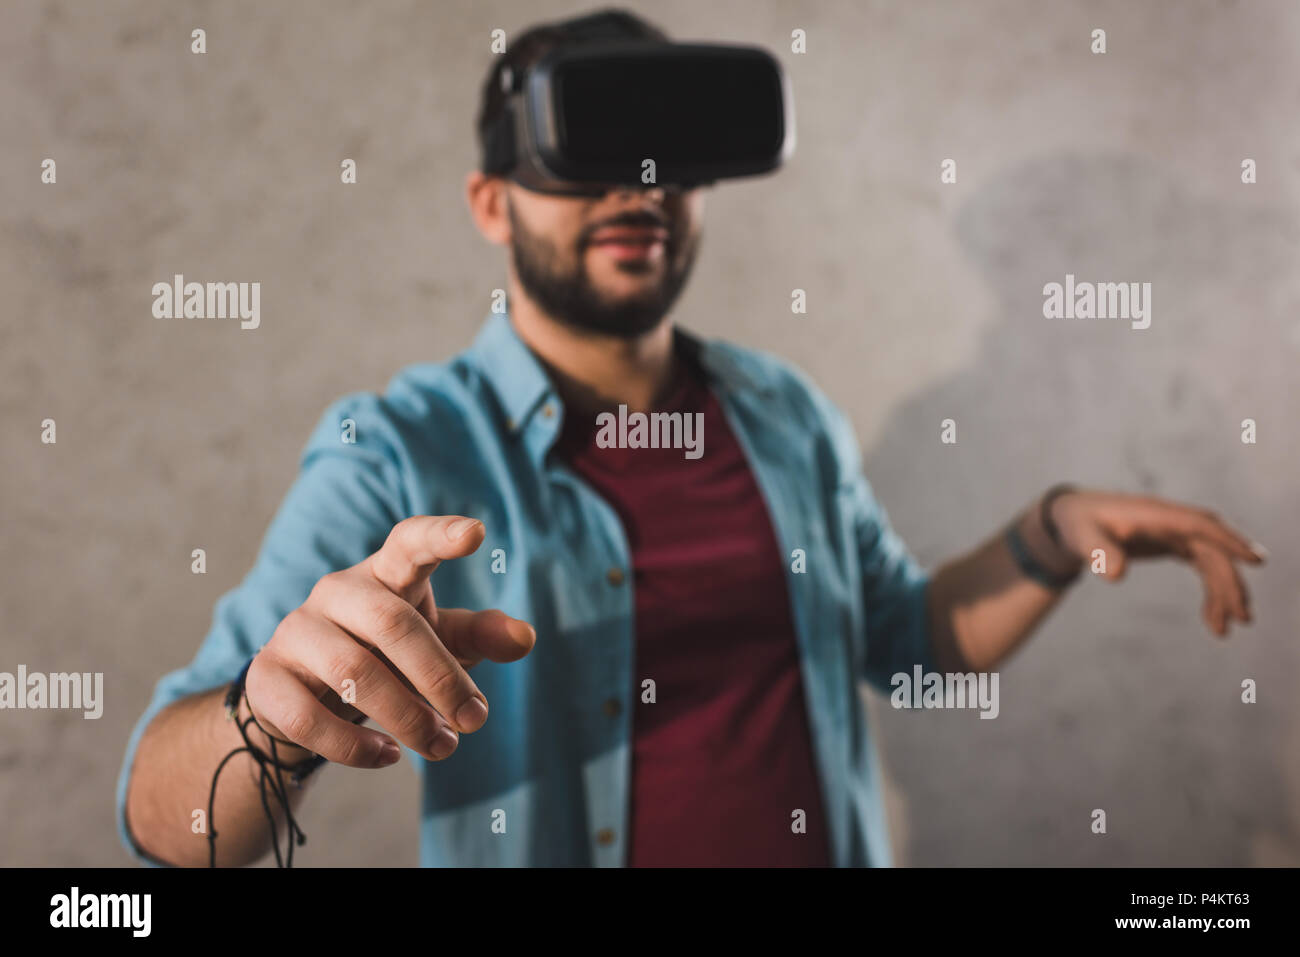 Smiling man using virtual reality headset Stock Photo